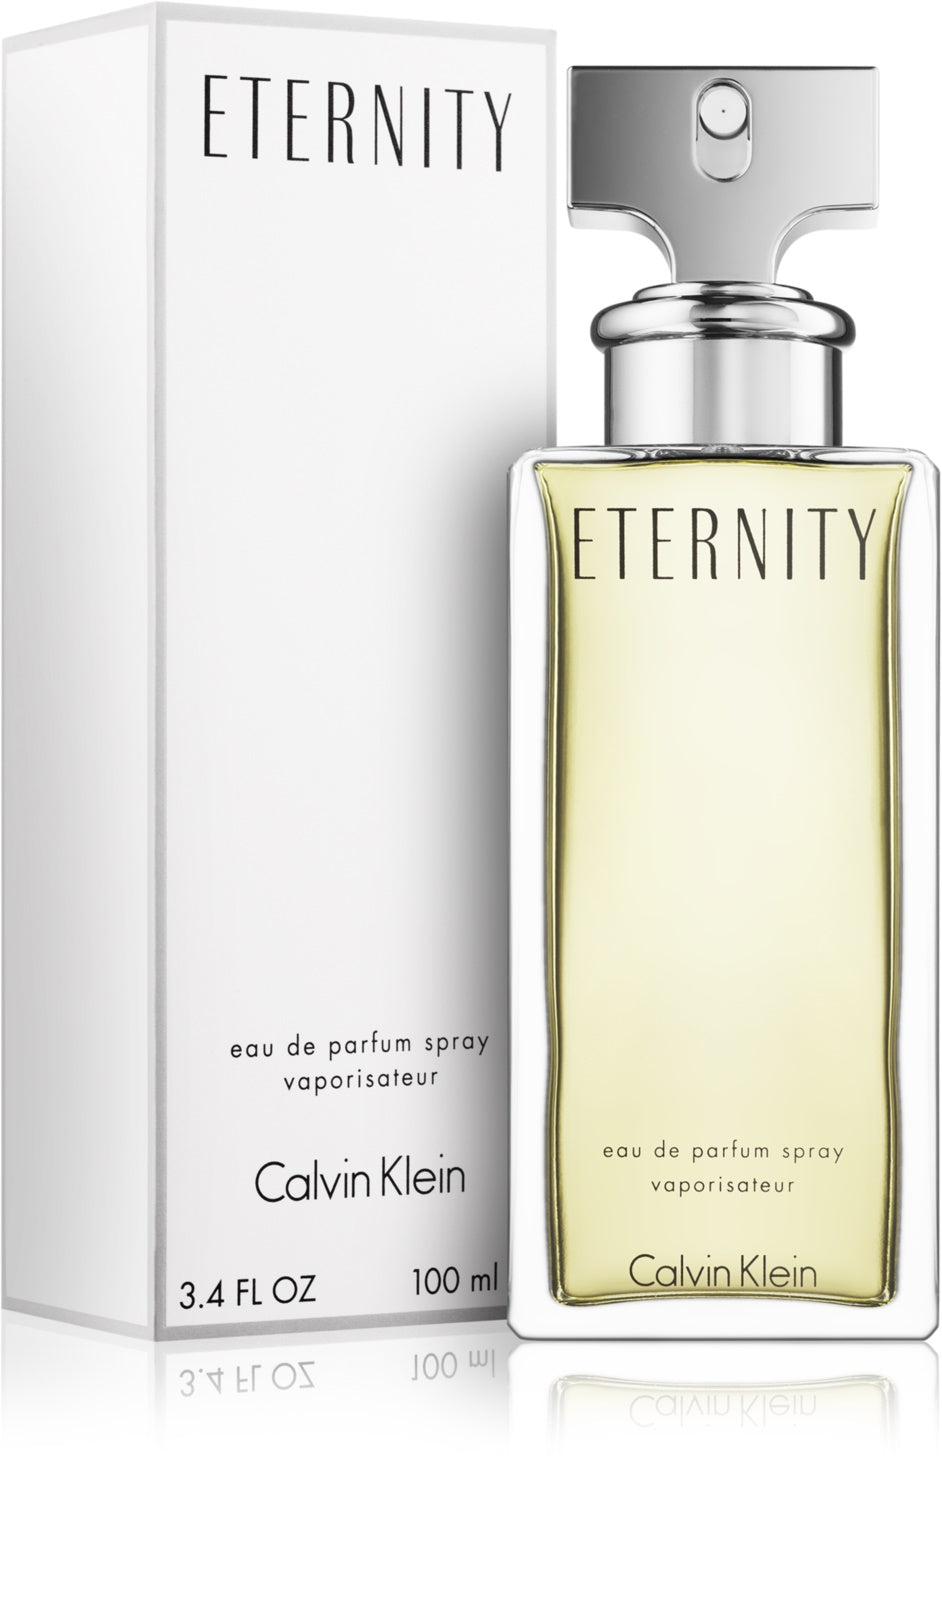 CK Eternity for – Perfume Planet